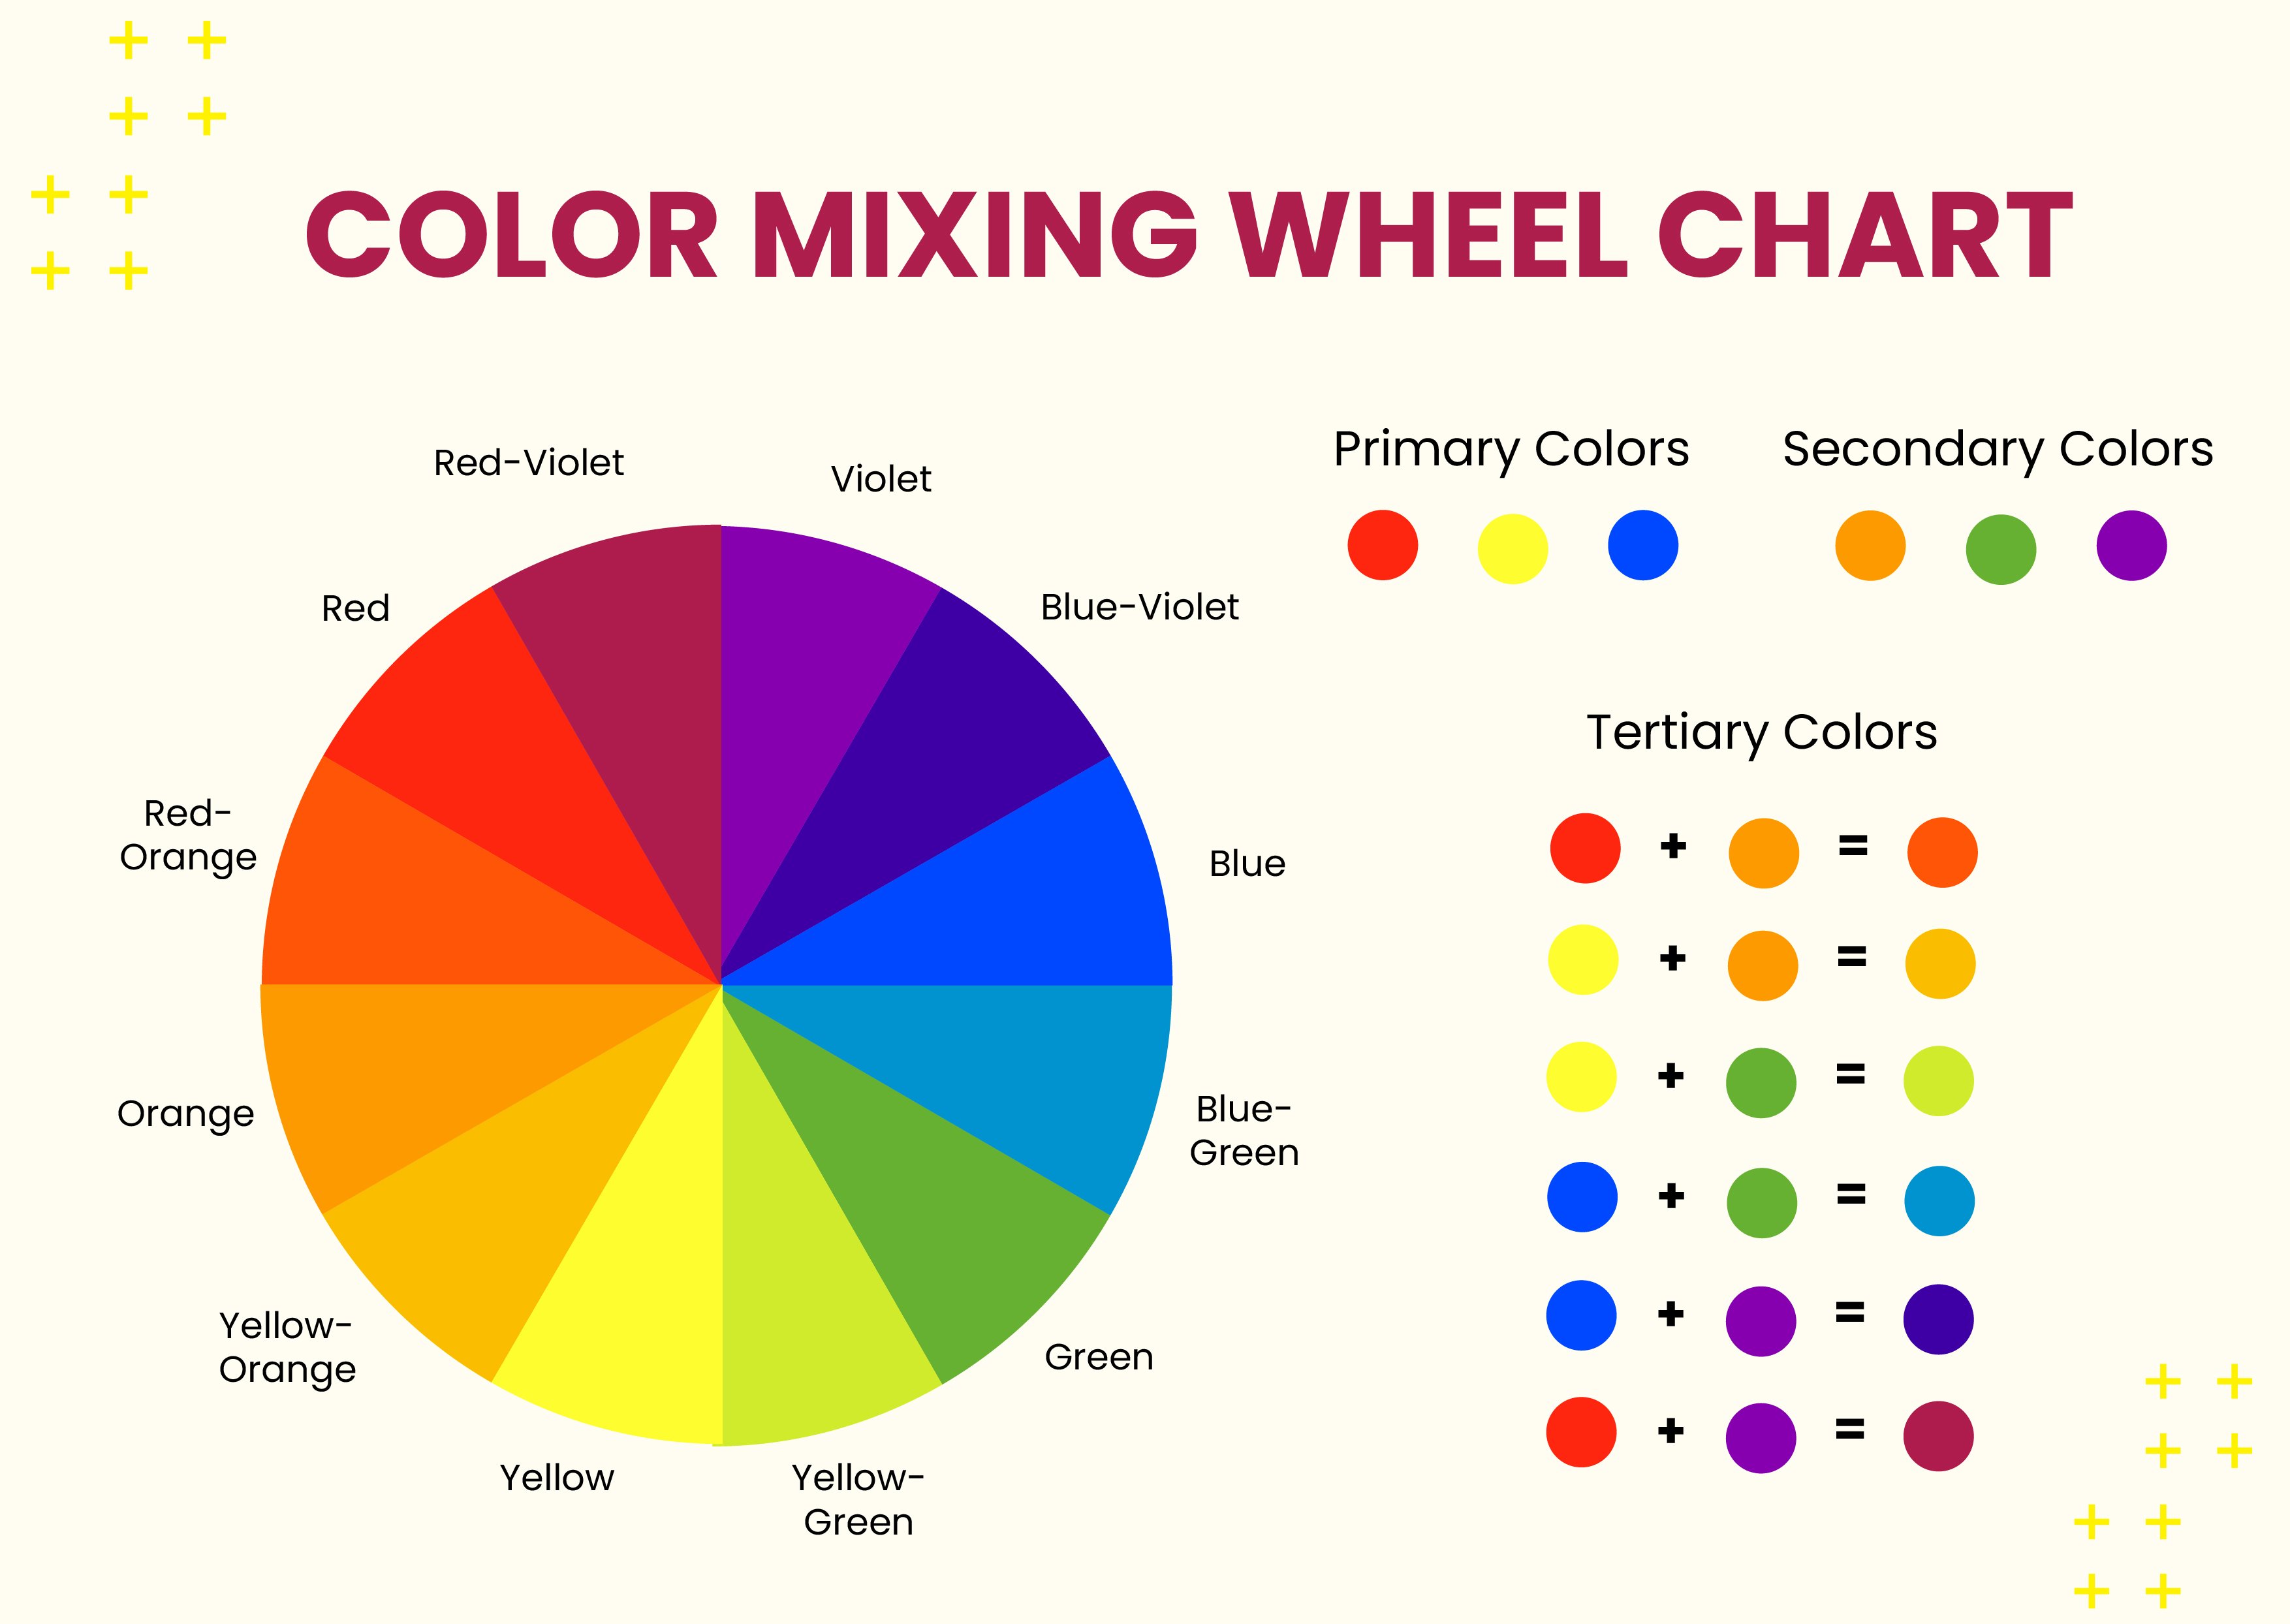 Free Basic Color Wheel Chart - Download in PDF, Illustrator